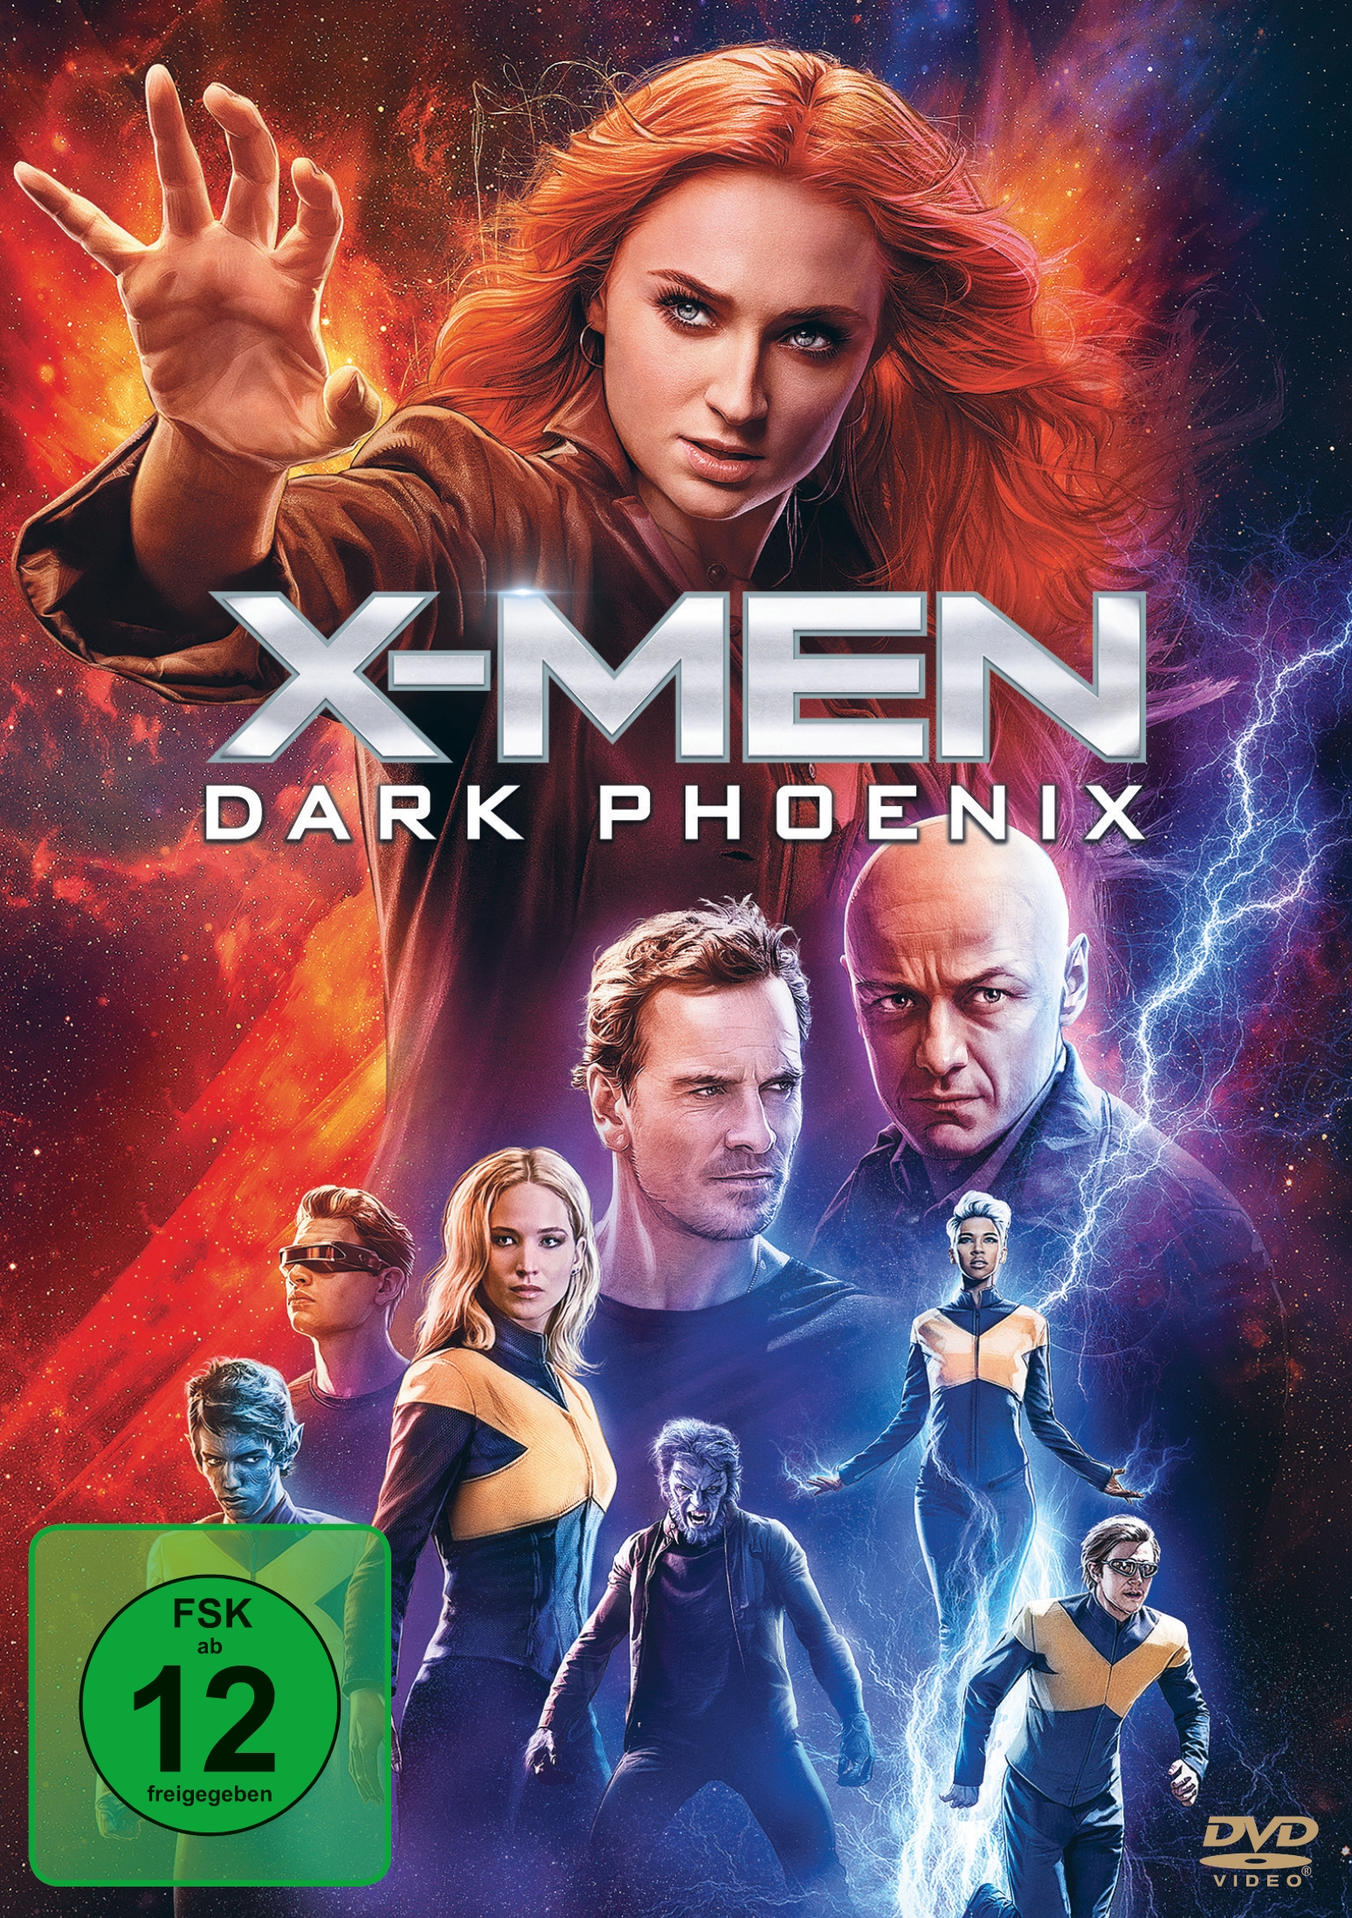 X-Men: Dark Phoenix DVD